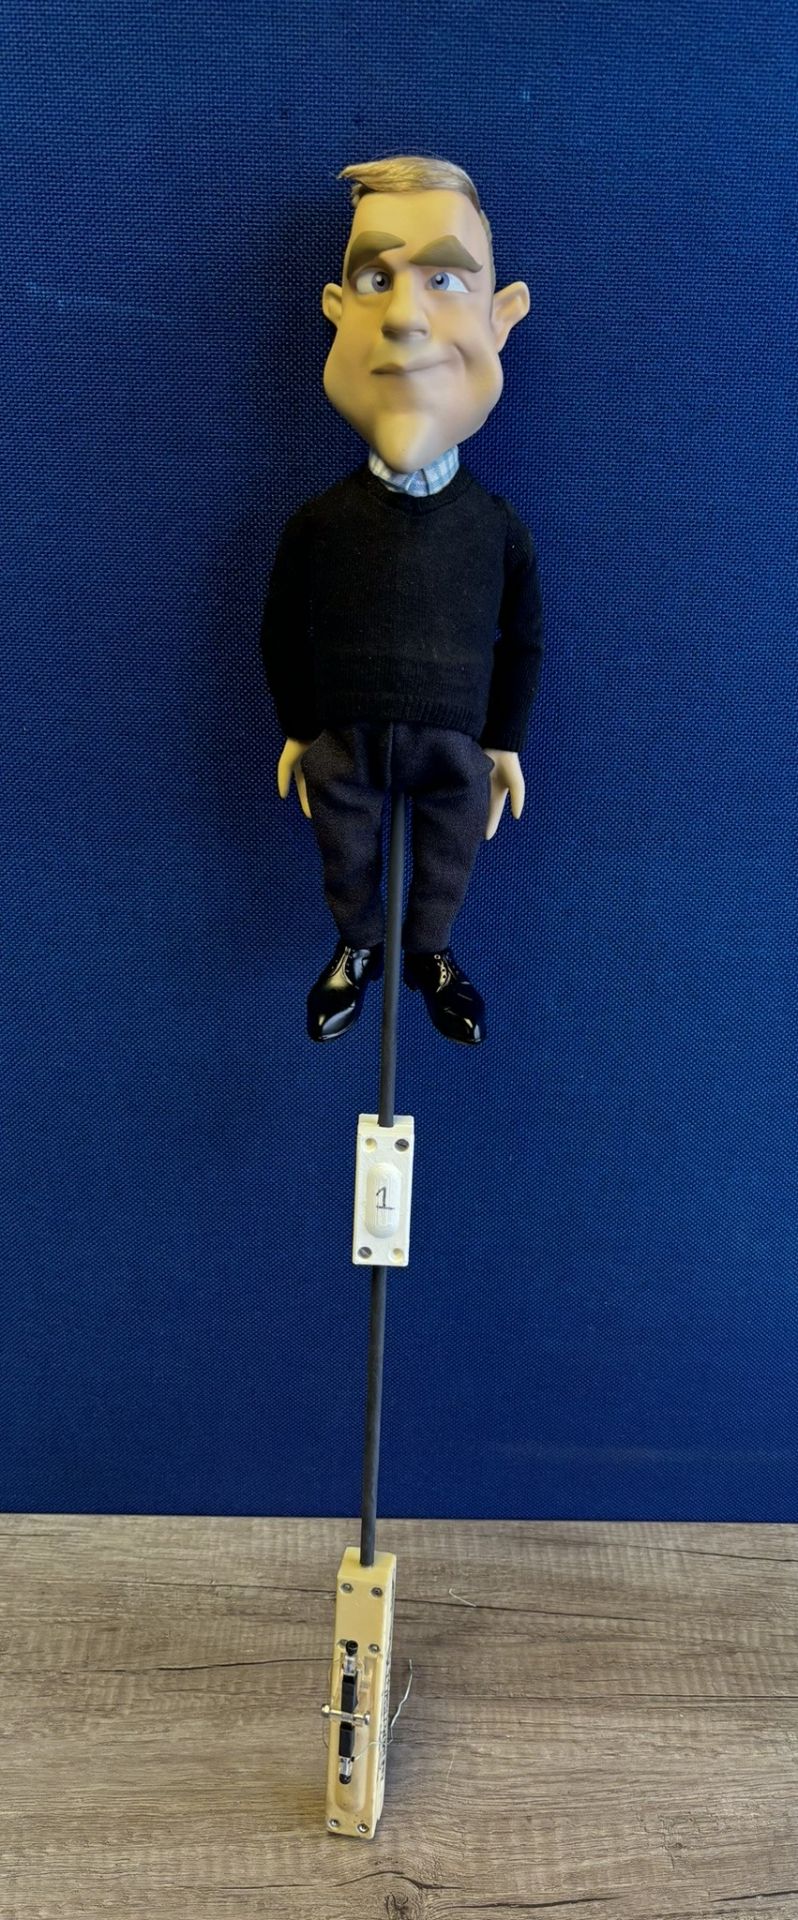 Newzoid puppet - Gary Barlow - Image 3 of 3